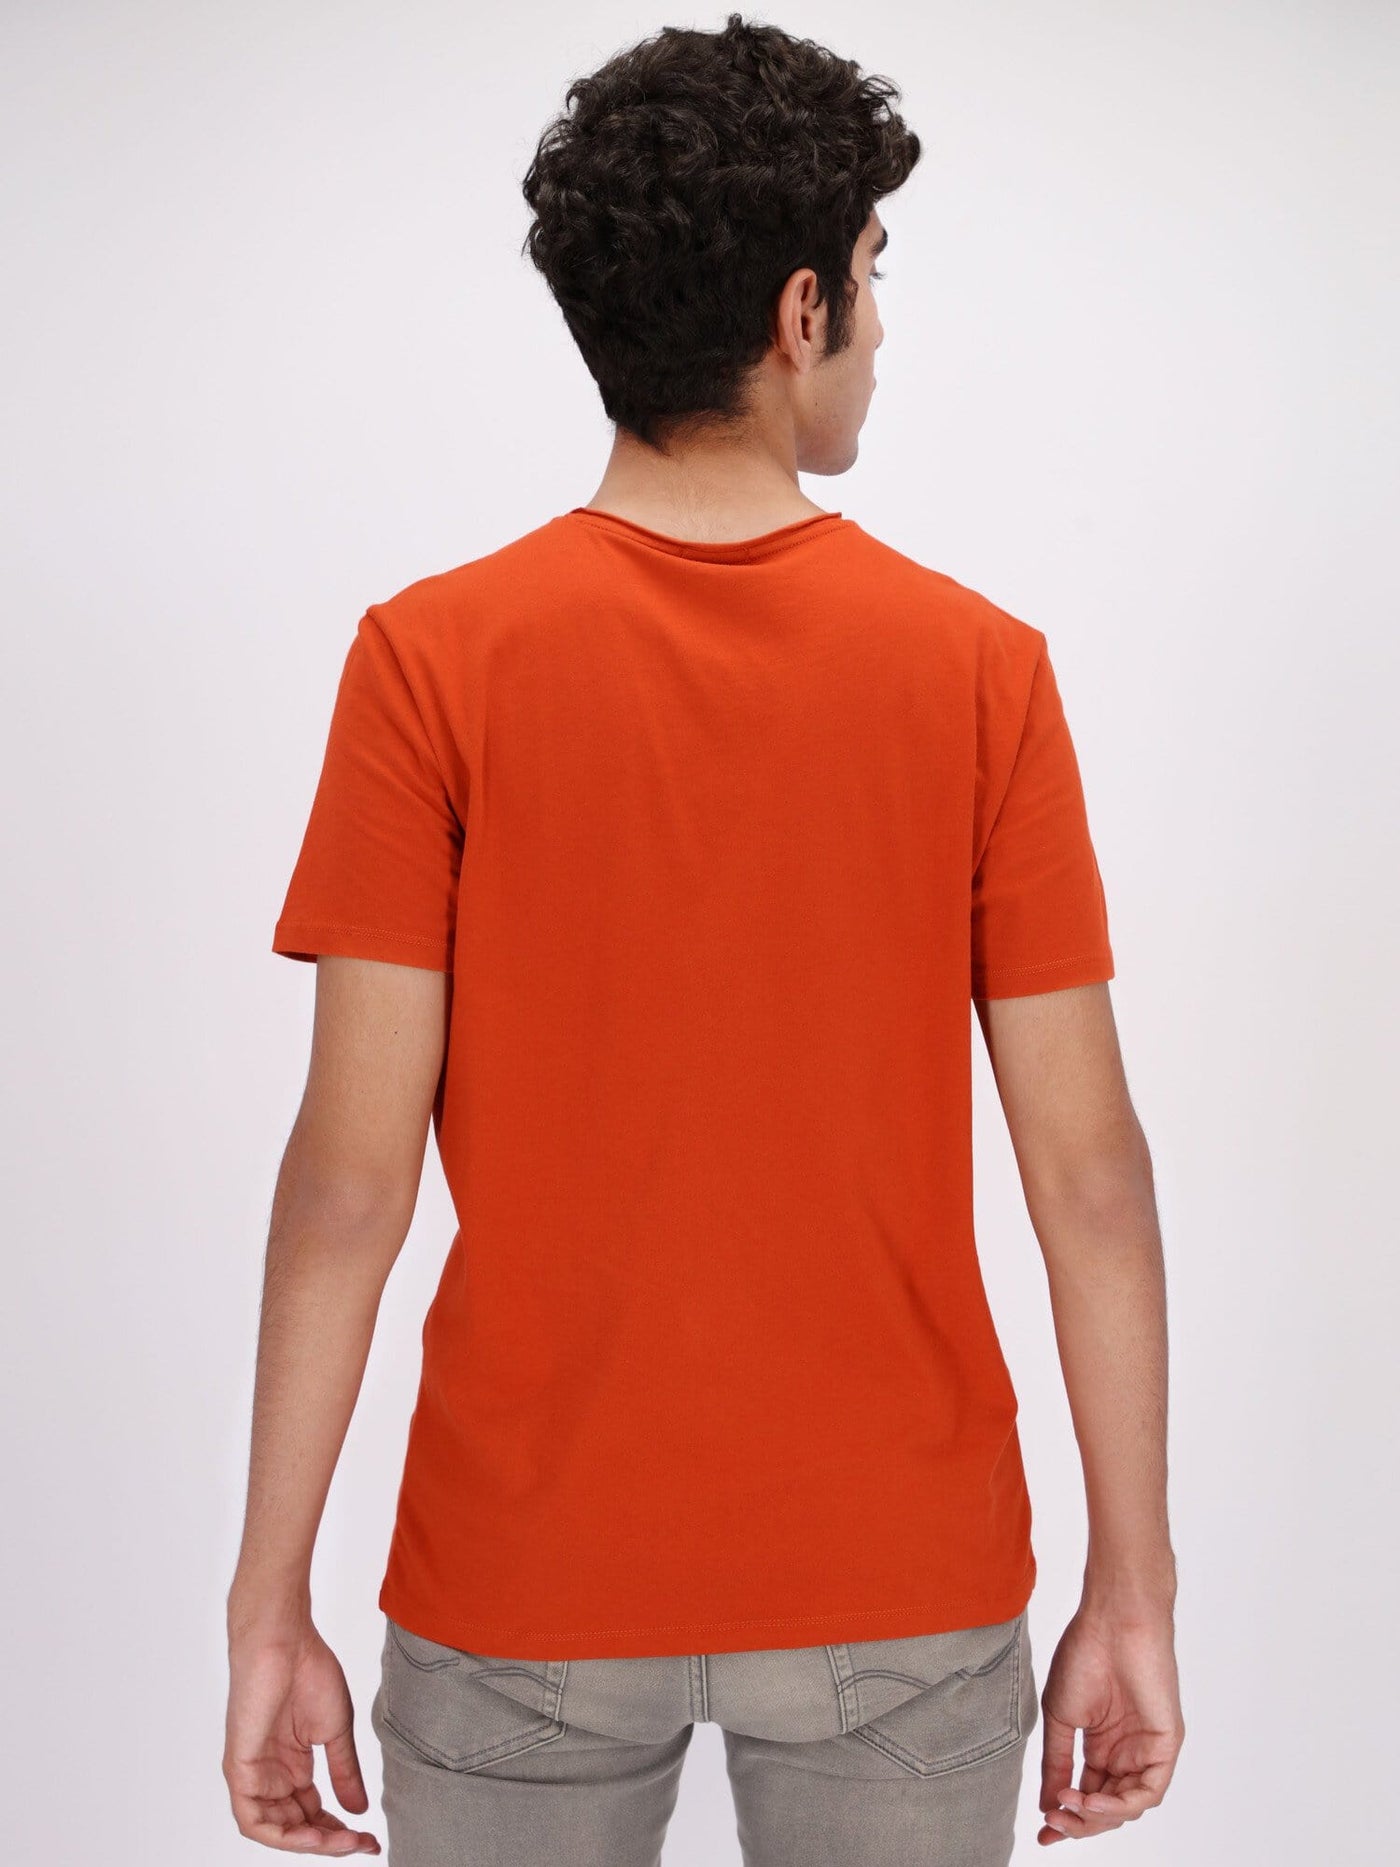 OR T-Shirts Chest Pocket V-Neck Solid T-Shirt